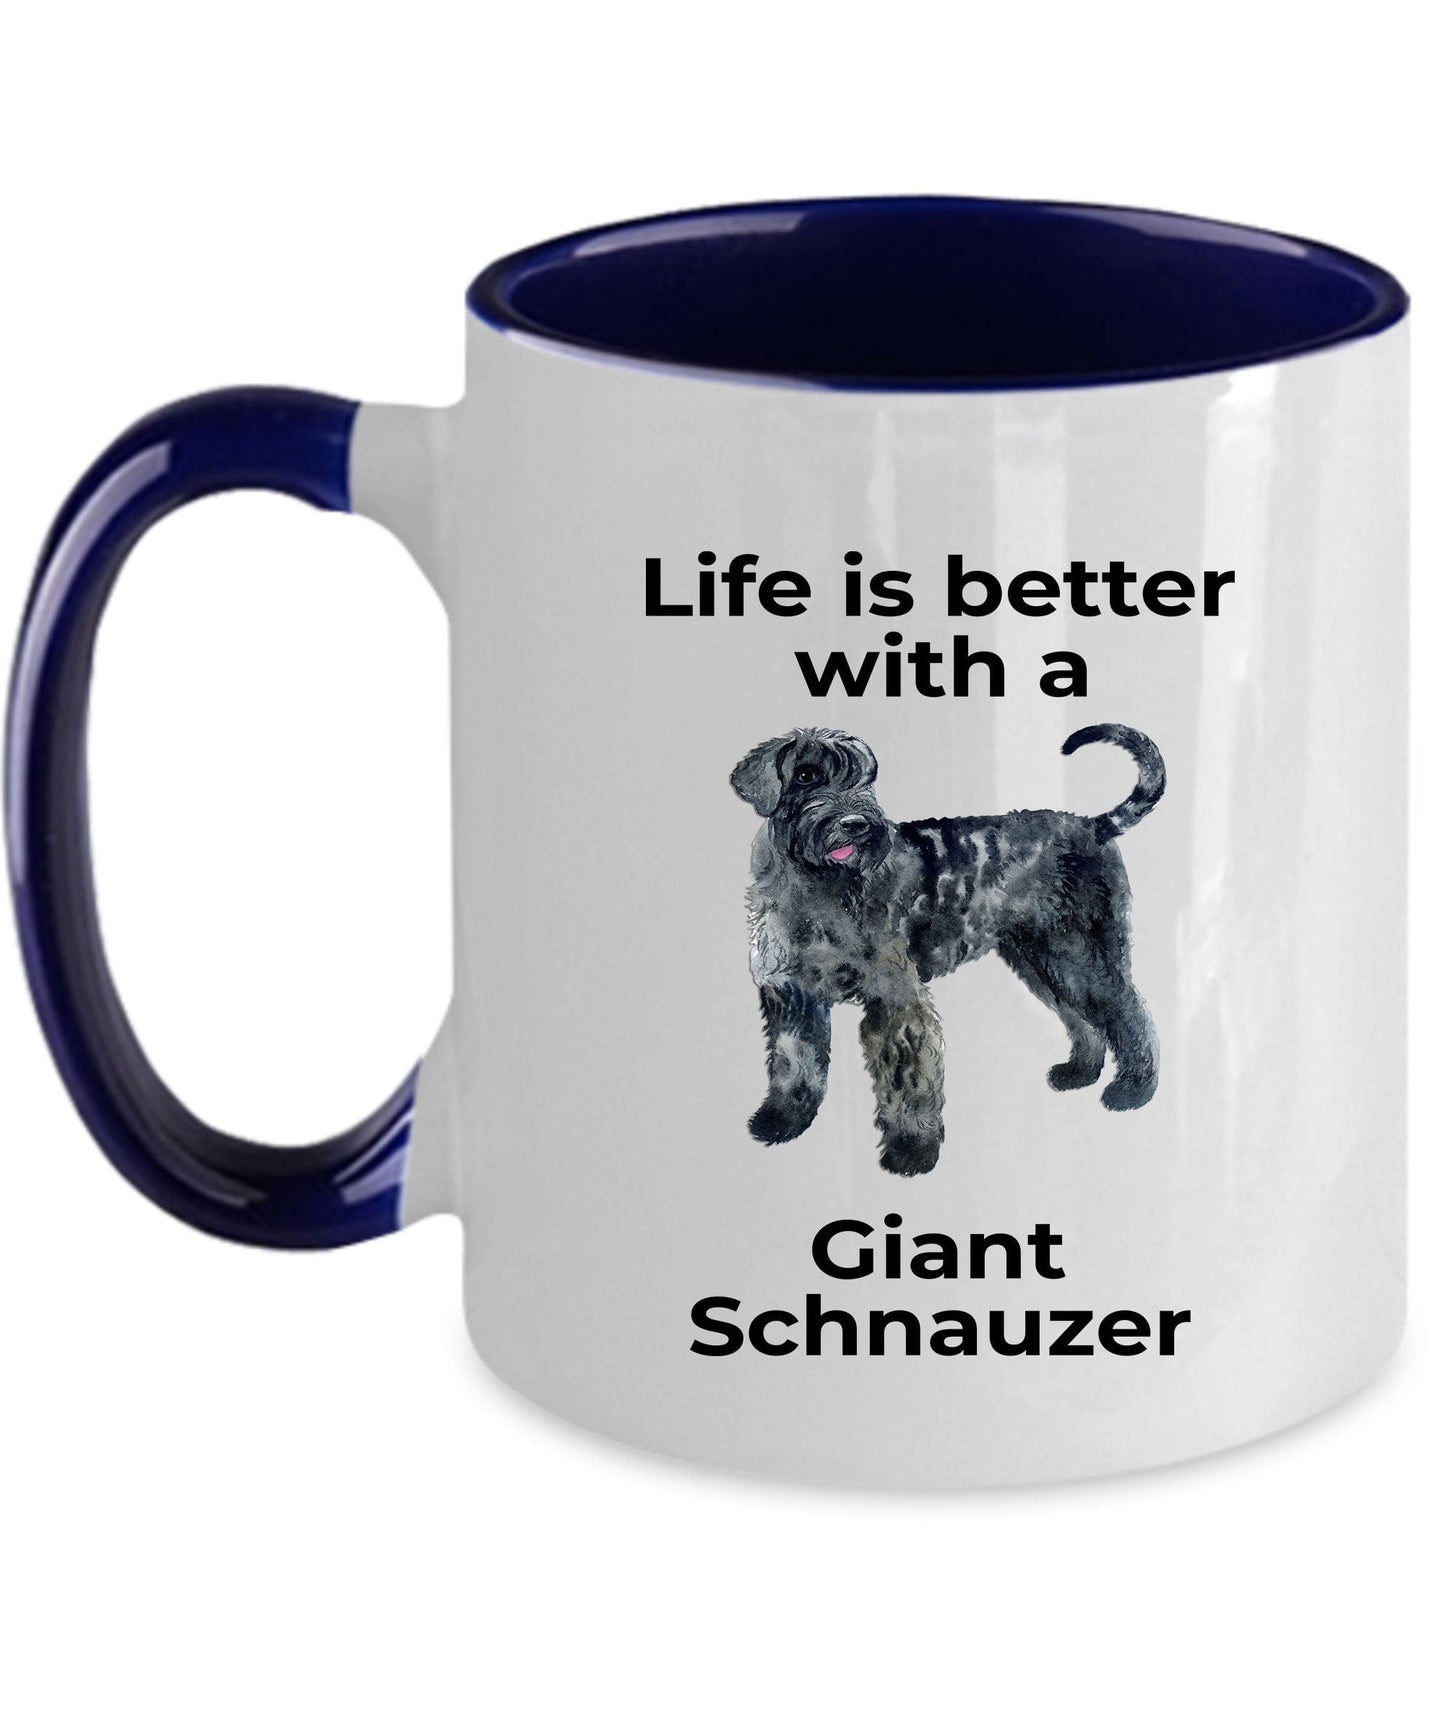 Giant Schnauzer Dog Coffee Mug - Life is Better